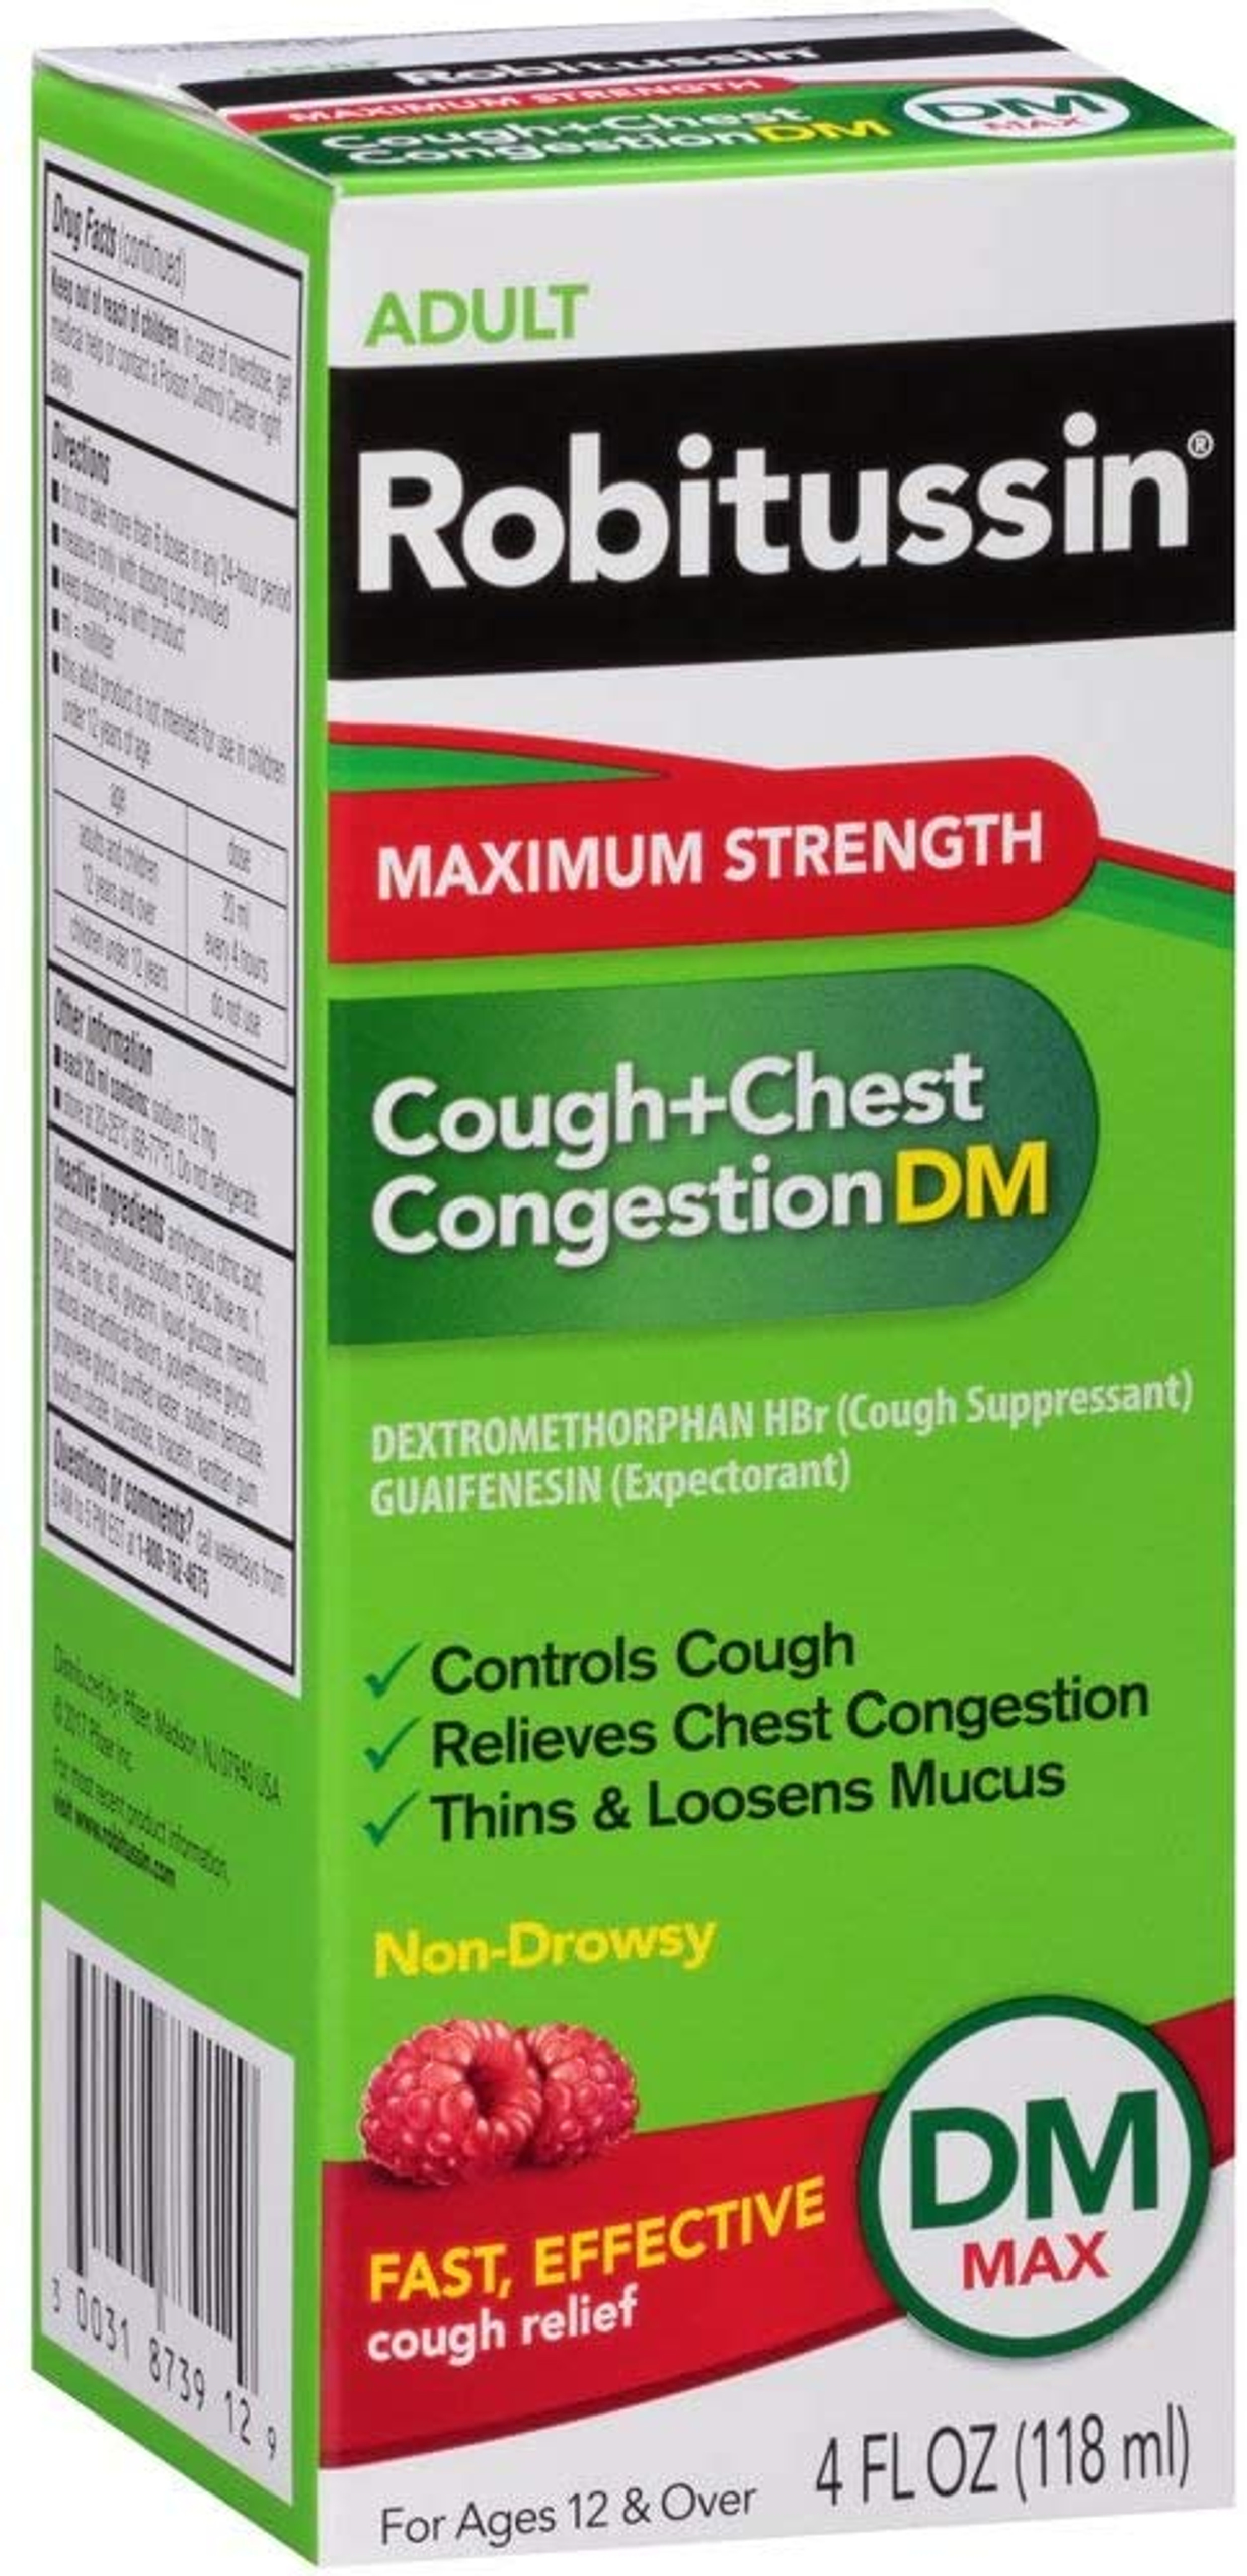 Robitussin Adult Cough+Chest Congestion DM Liquid Maximum Strength 4 oz.